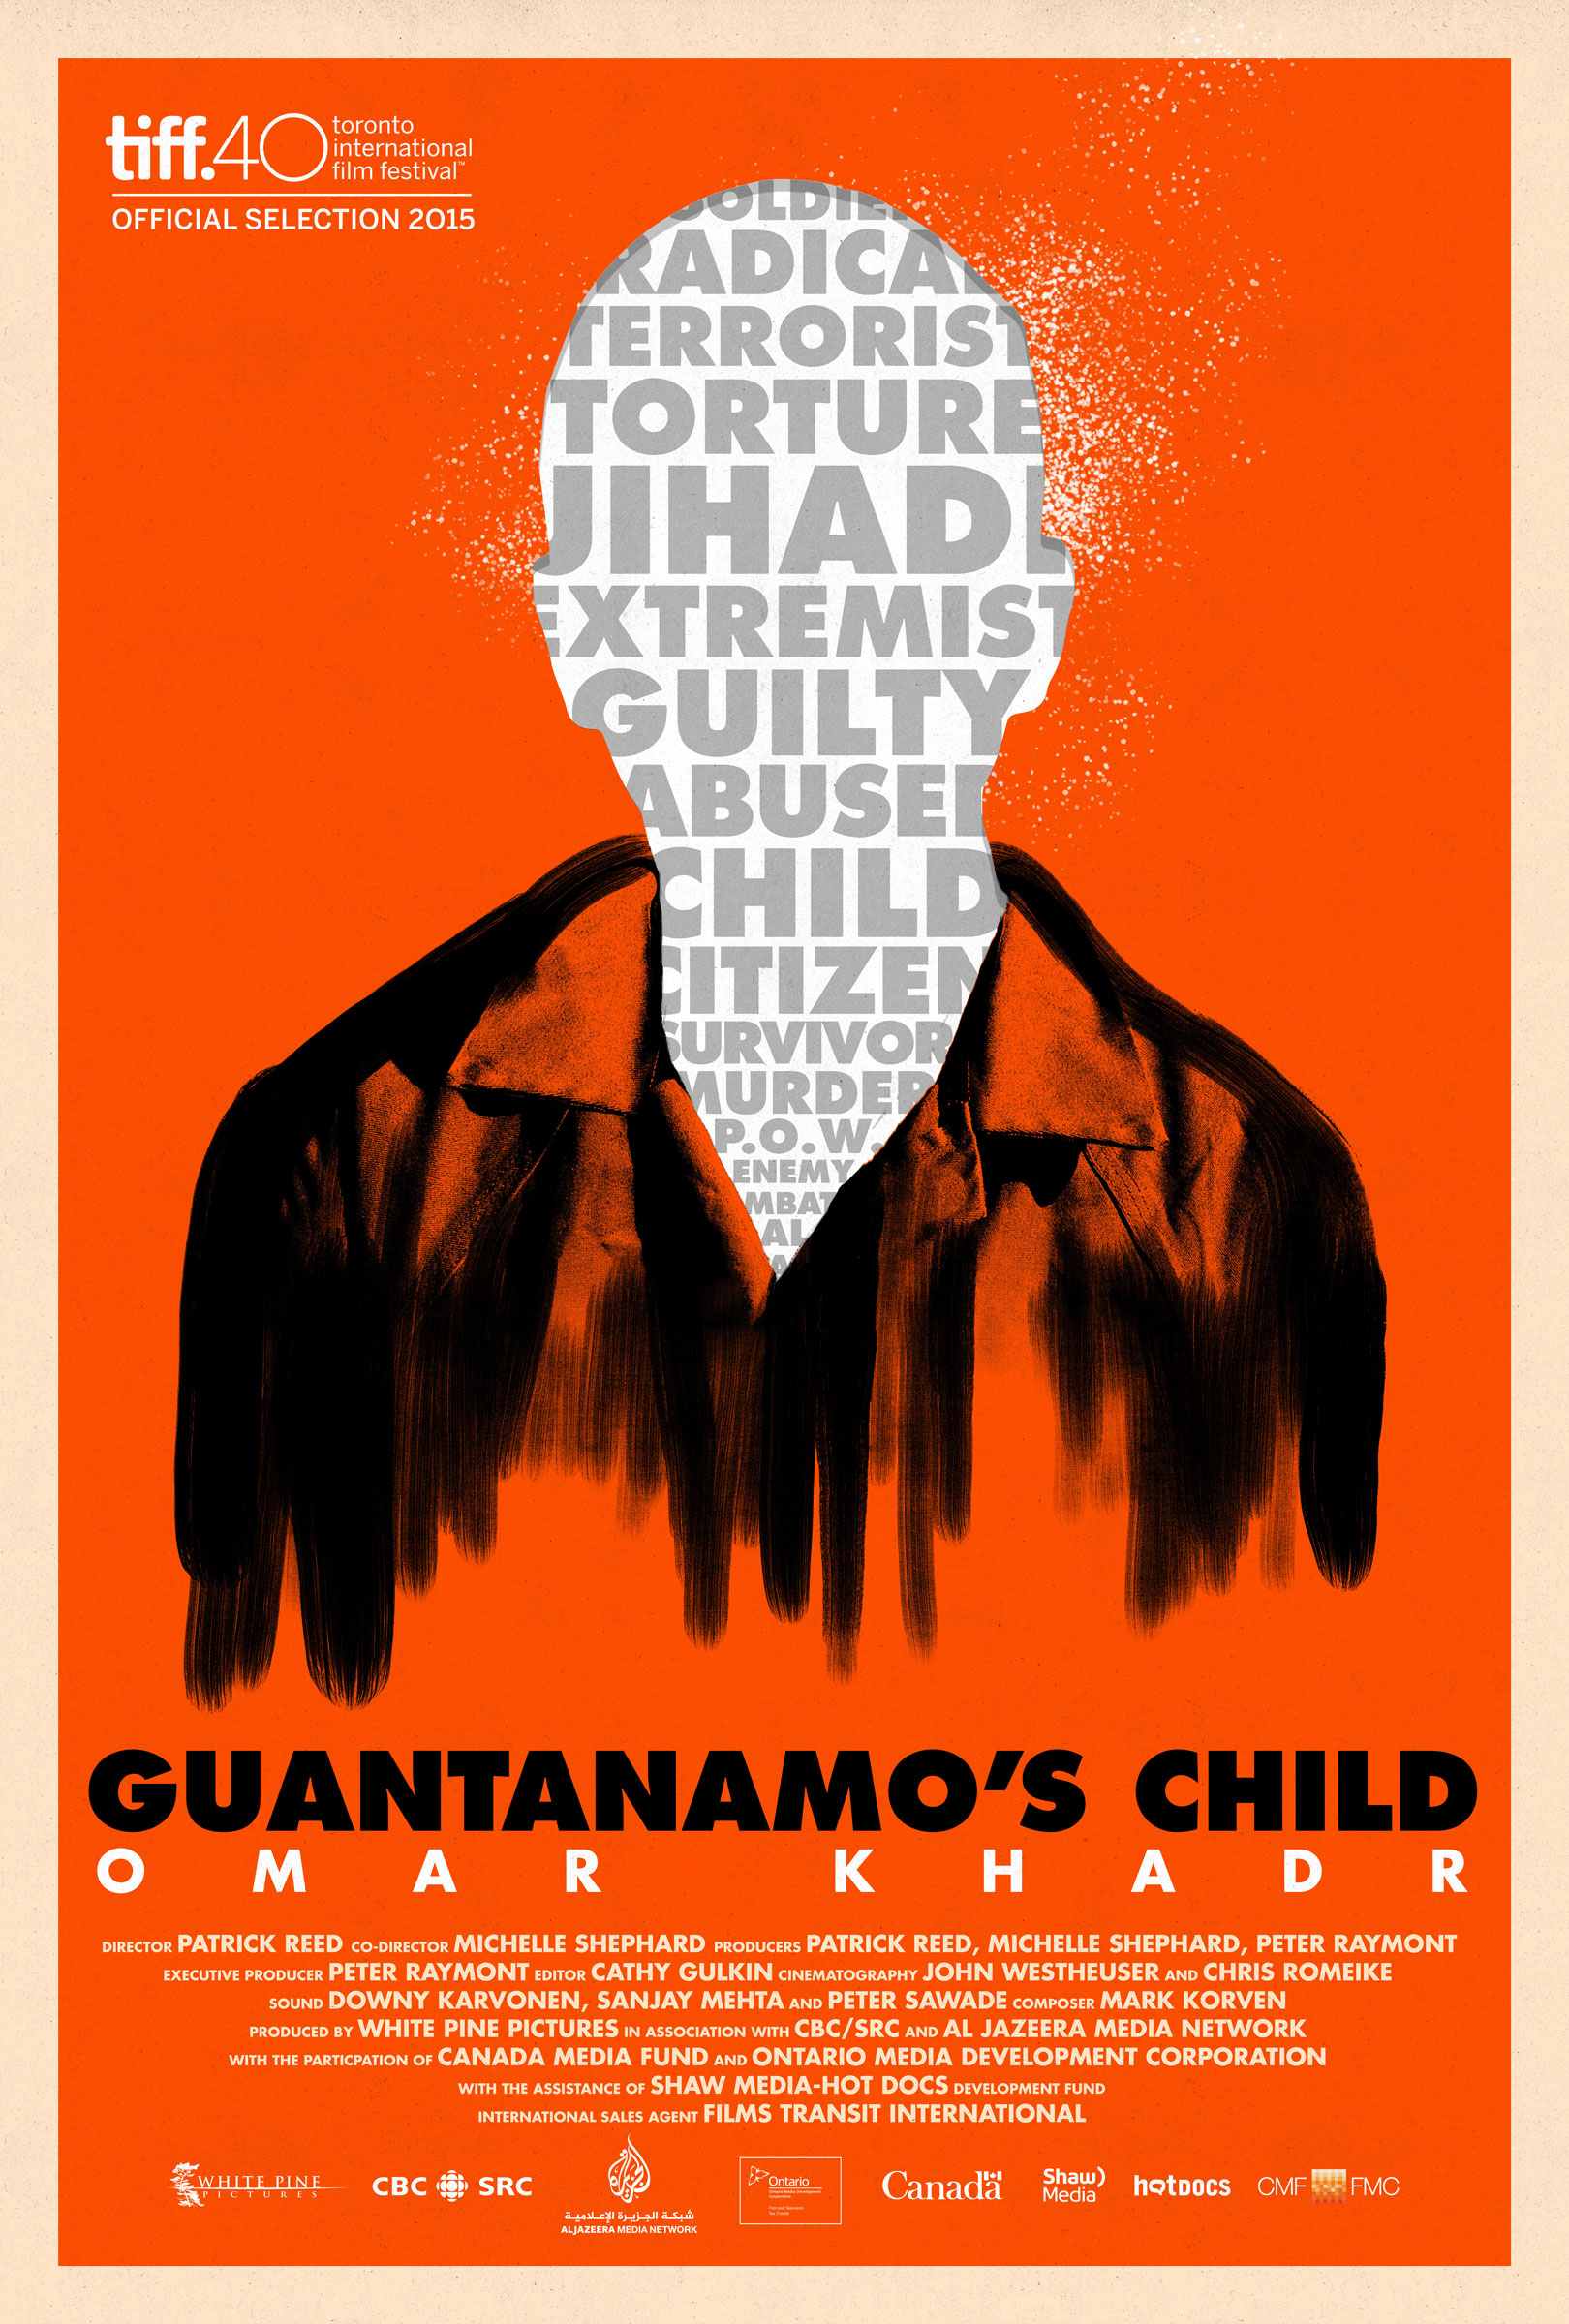 Guantanamo’s Child: Omar Khadr